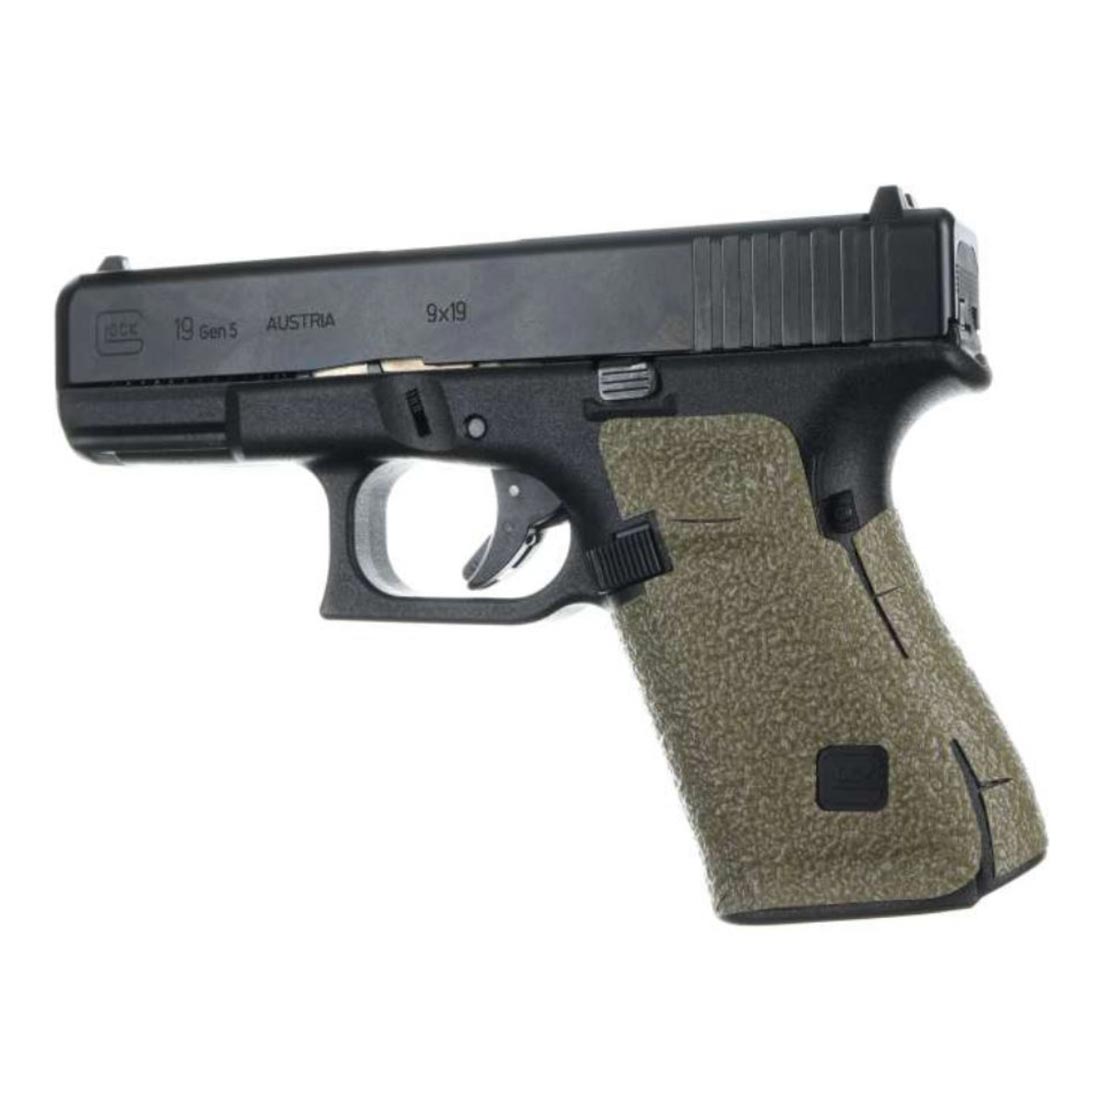 Grip Moss/Sable Glock 19, 23, 25, 32, 38 (gen 4) large backstrap